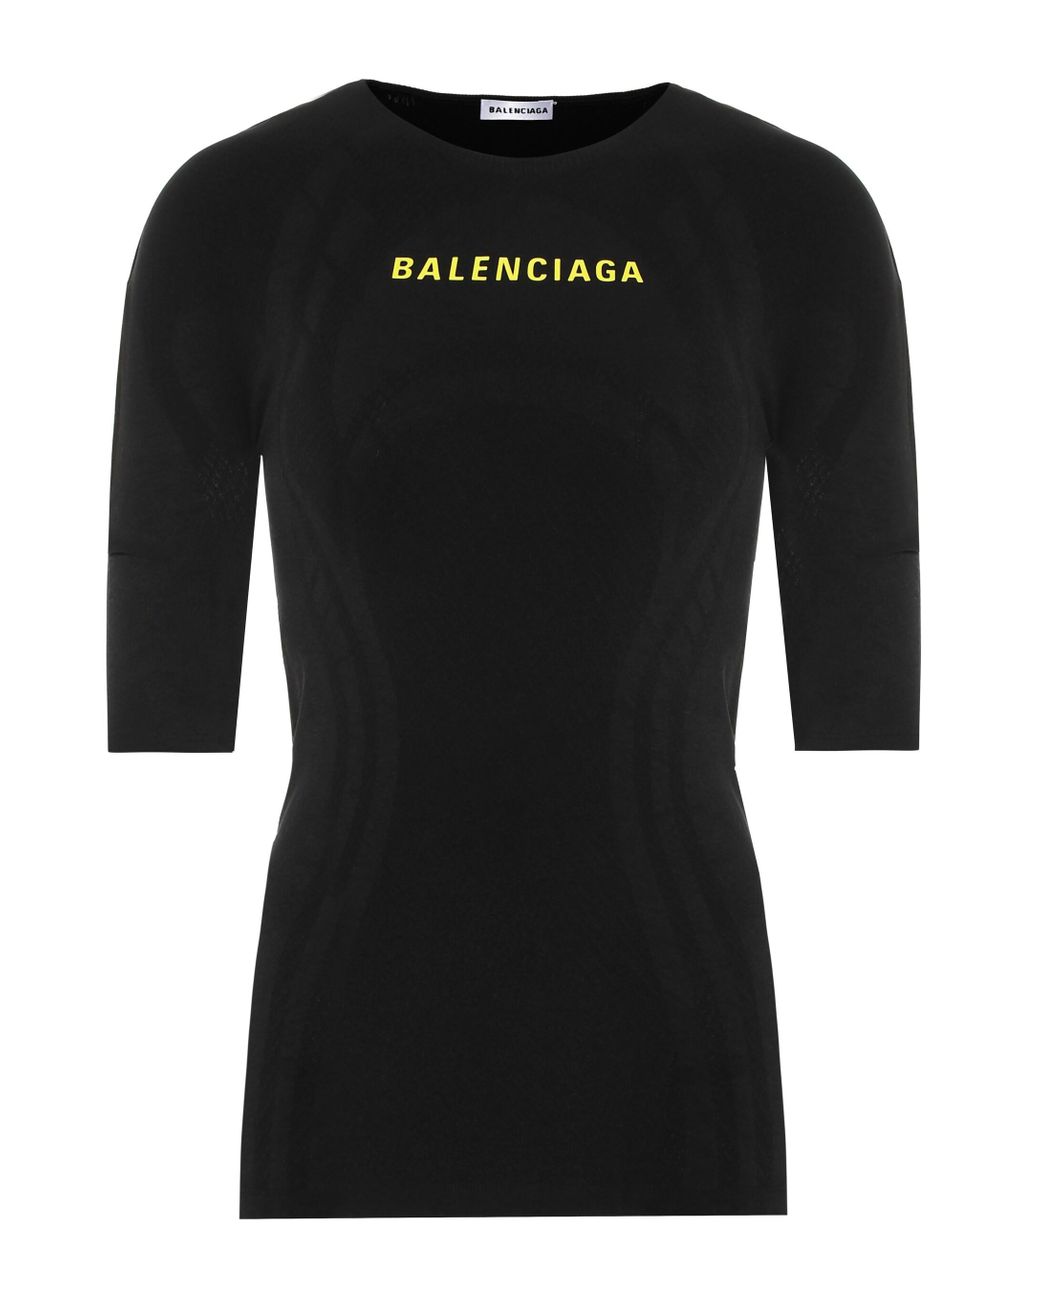 Balenciaga Logo Athletic Stretch-jersey Top in Black - Save 24% - Lyst